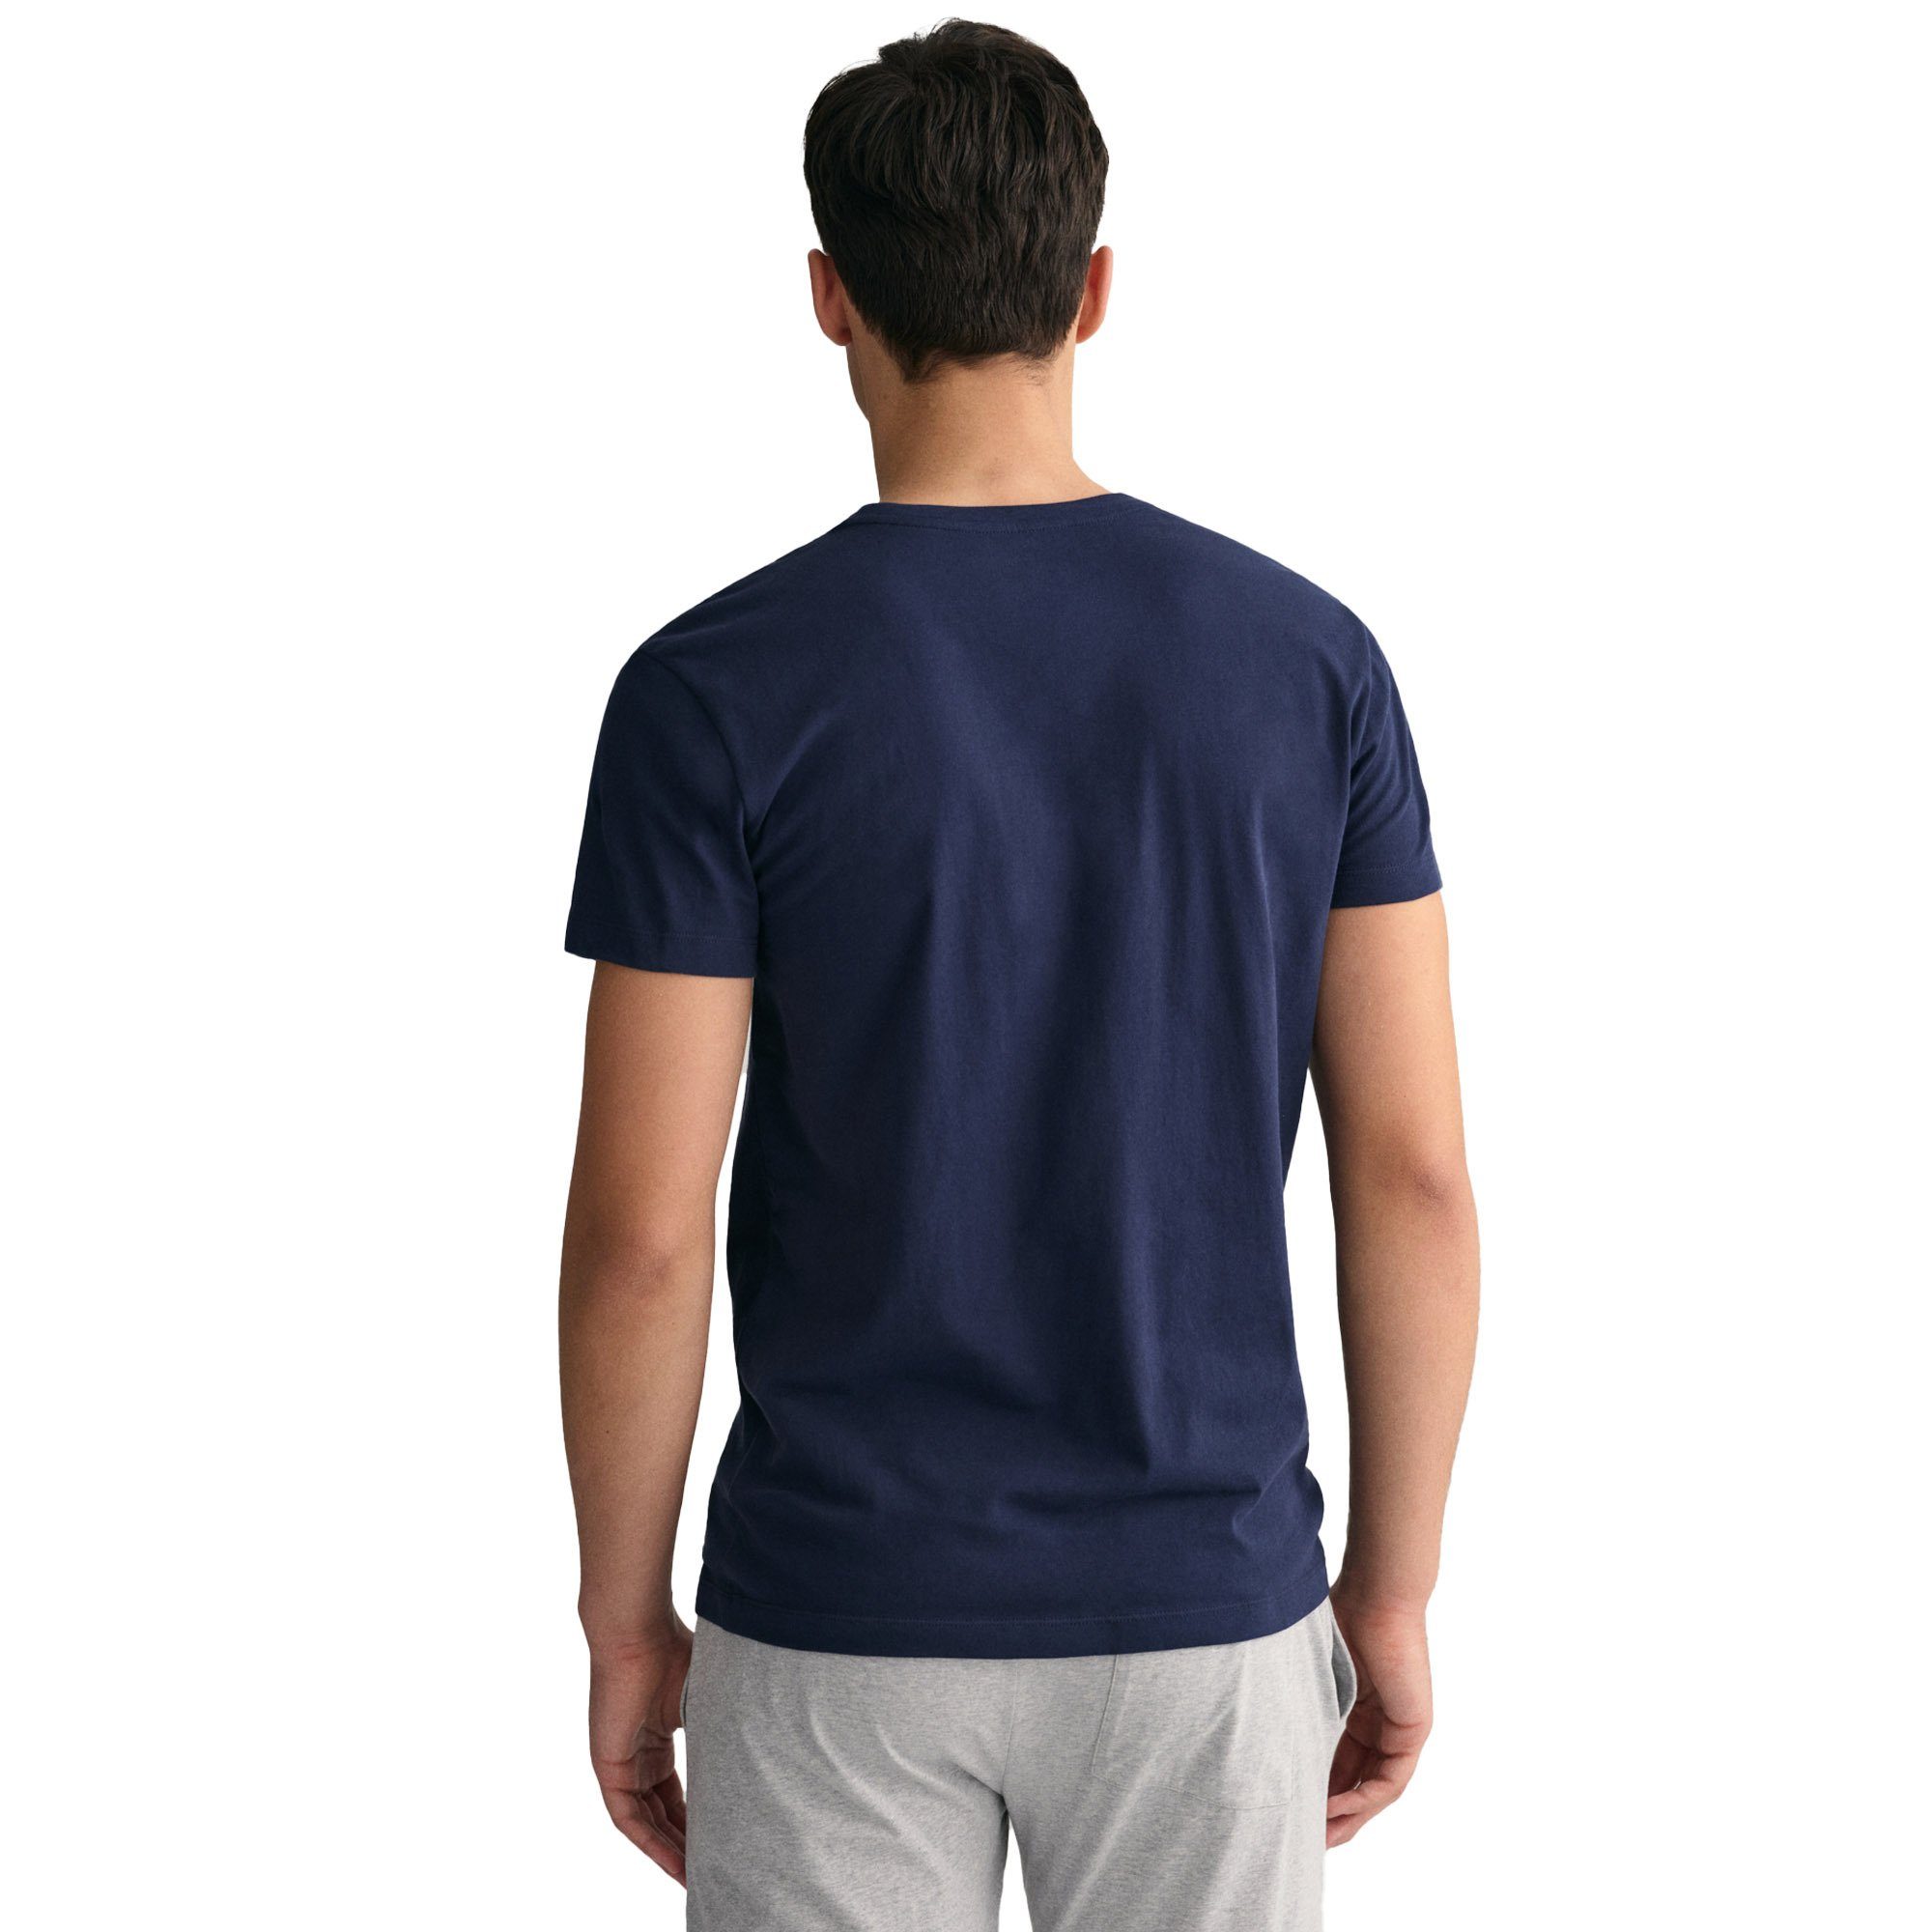 Gant T-Shirt Herren T-Shirt, C-NECK T-SHIRT Pack 2-PACK Marineblau/Weiß 2er 